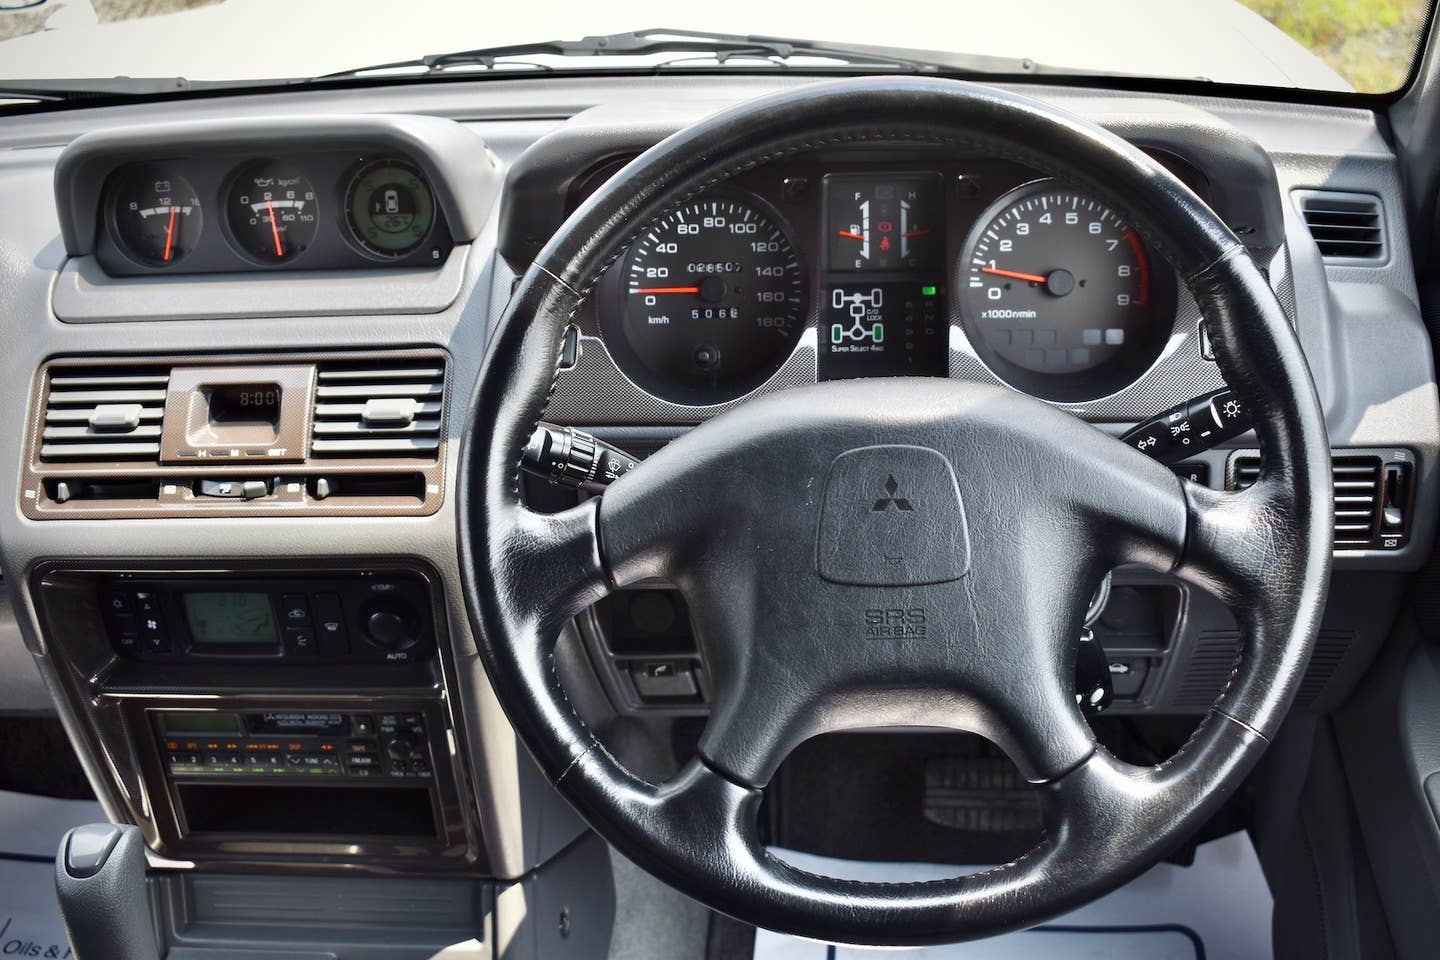 1997 Mitsubishi Pajero Evolution cockpit